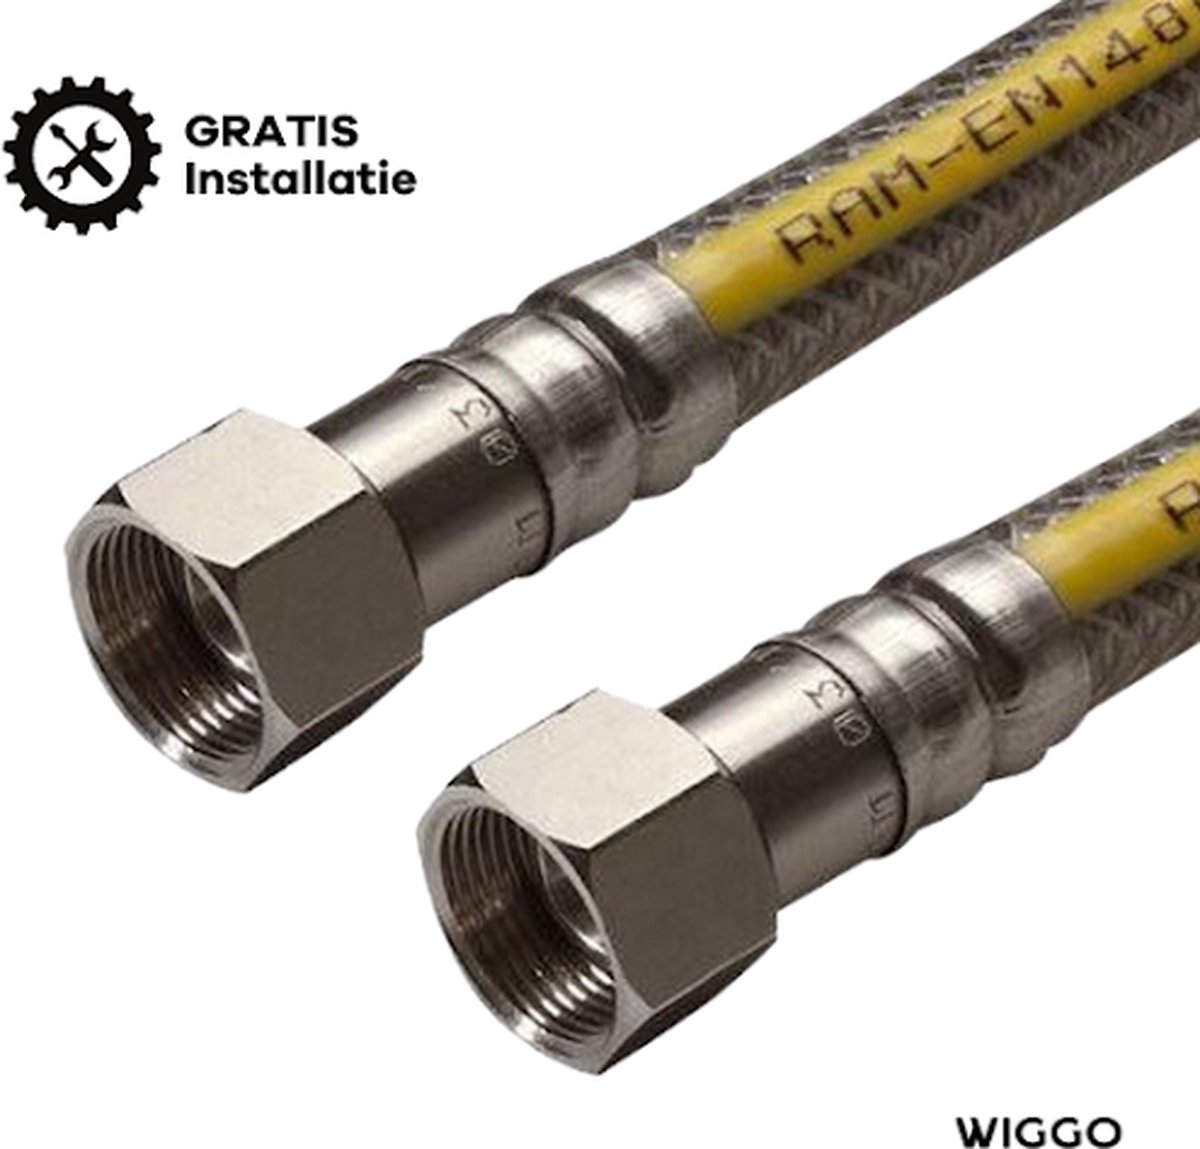 Wiggo Superflex Premium 1500 mm - Gratis Installatie